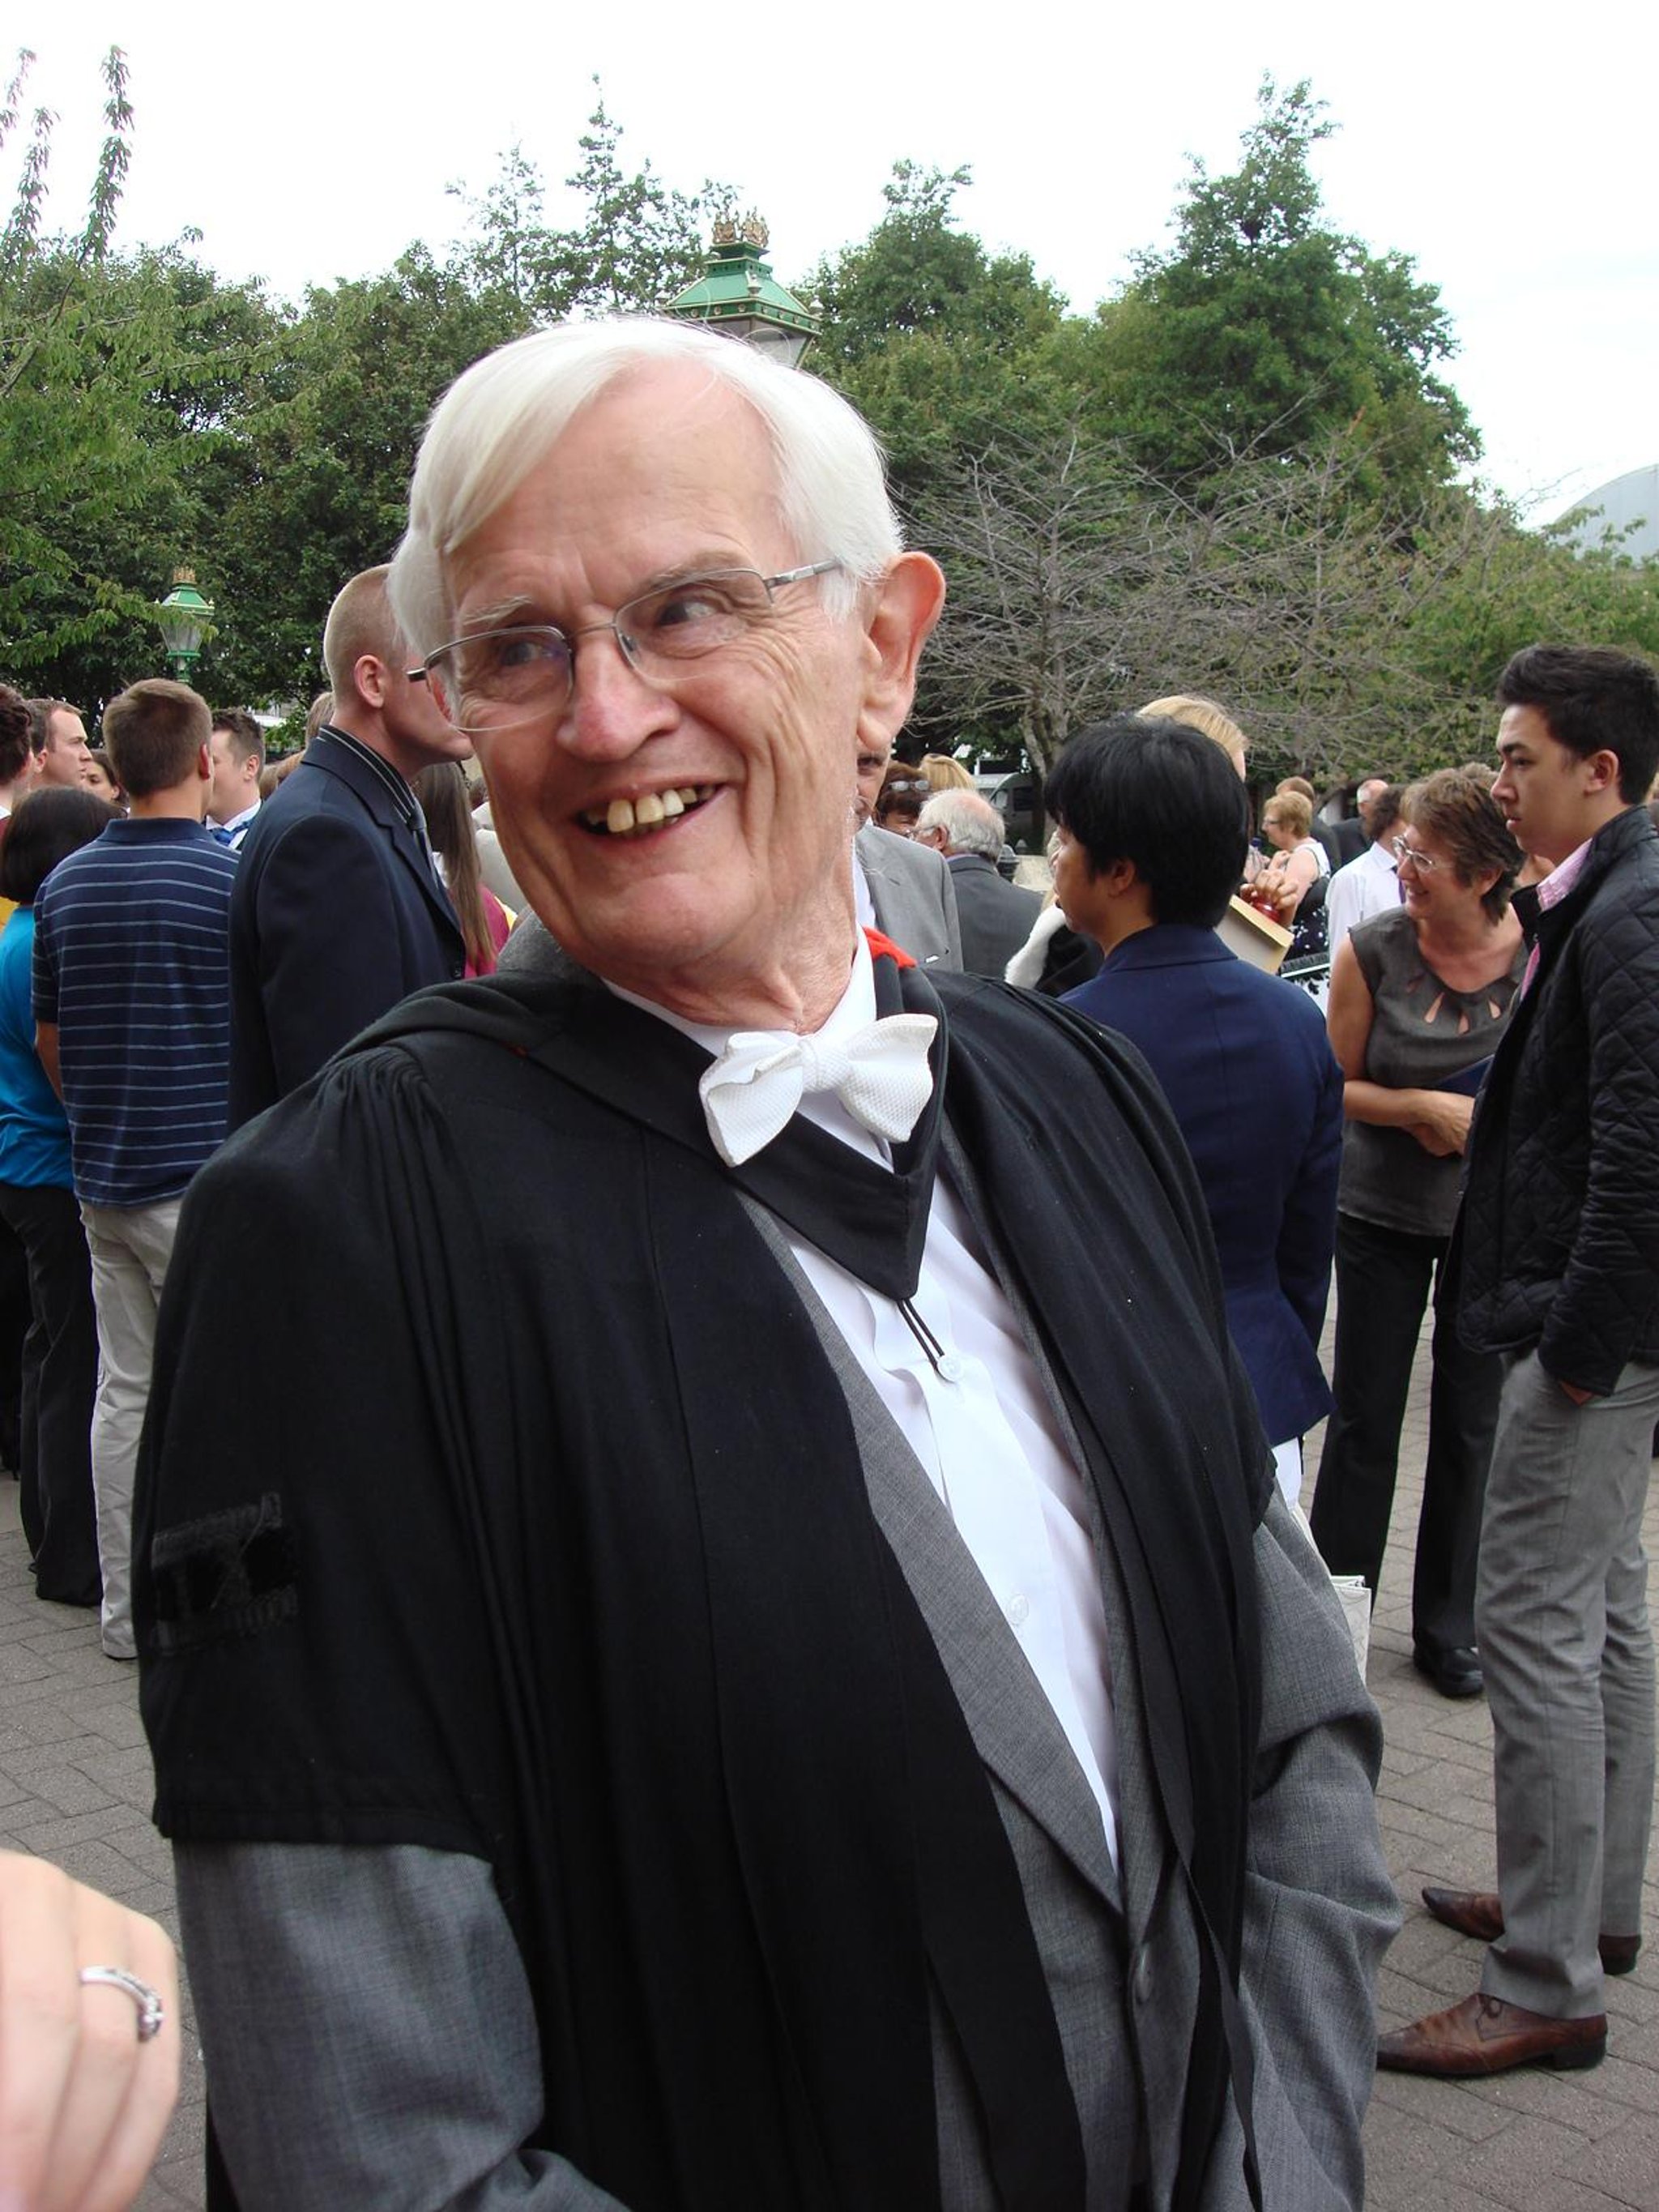 Prof Morley Sewell, former Dean of Royal (Dick) School of Veterinary Medicine